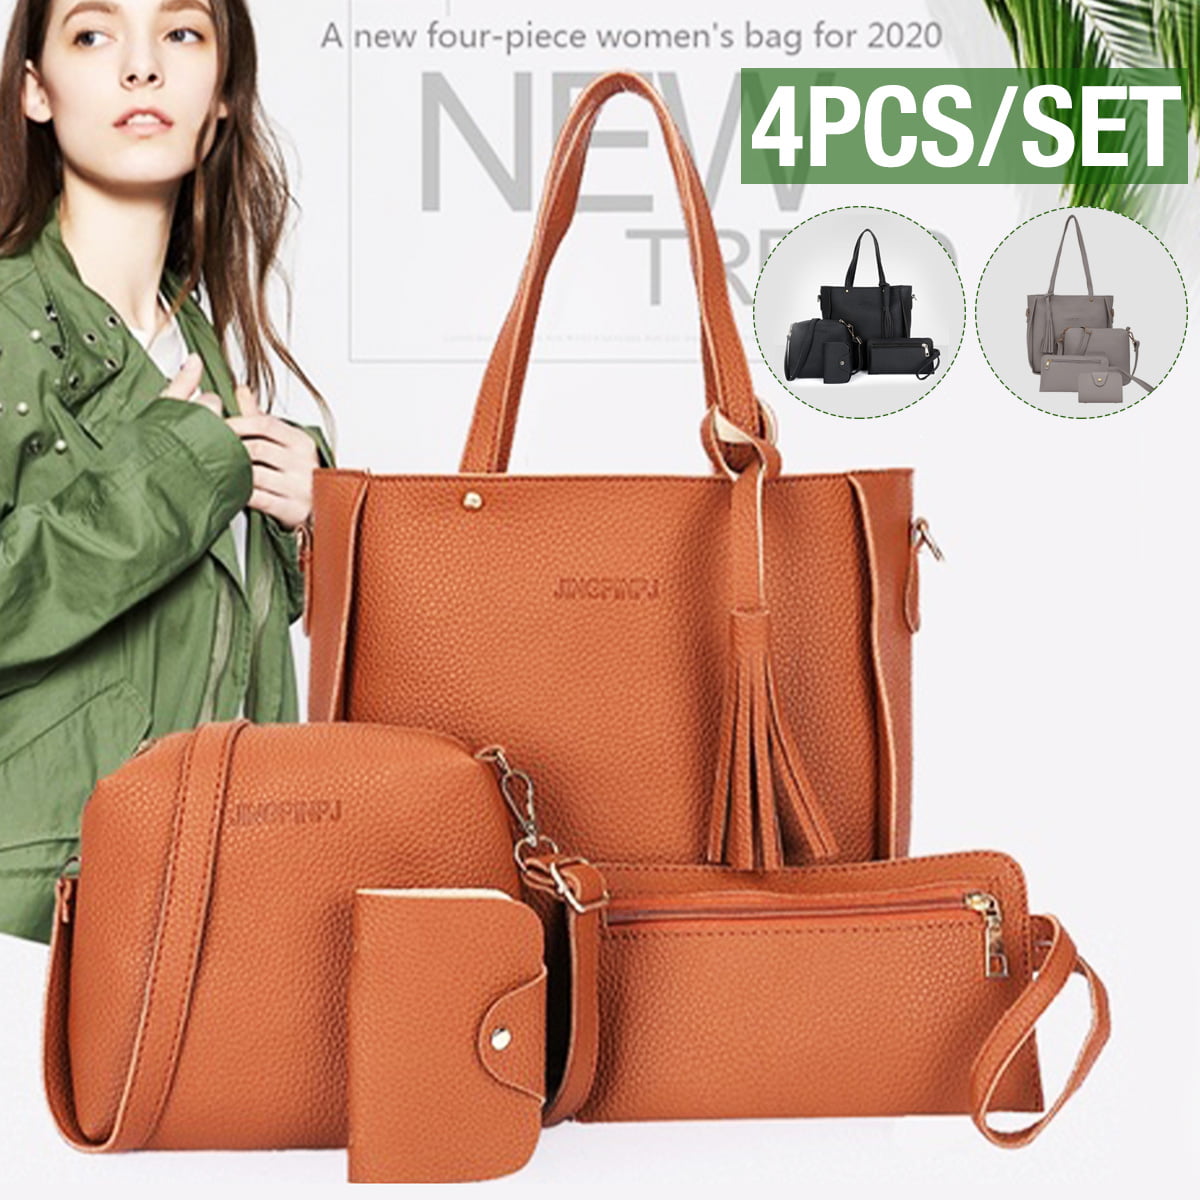 4pcs/Set Women Lady PU Leather Handbag Shoulder Bag Tote Purse Messenger Satchel 